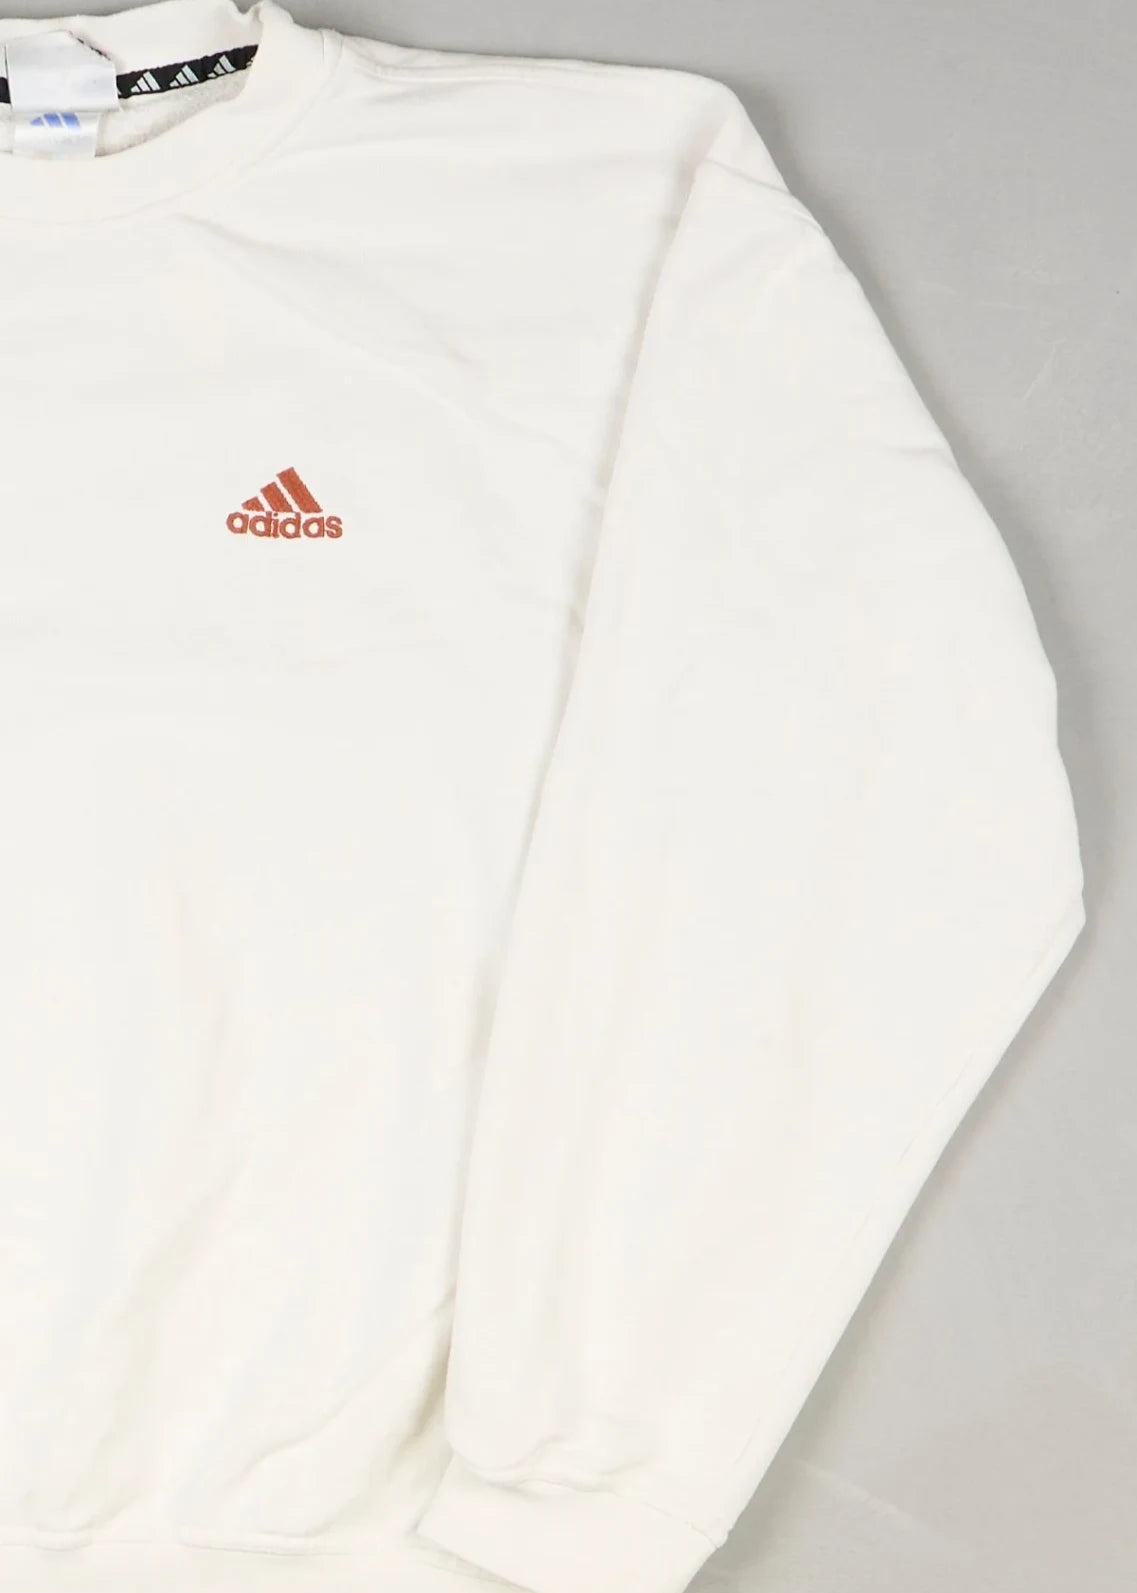 Adidas - Sweatshirt (L) Right